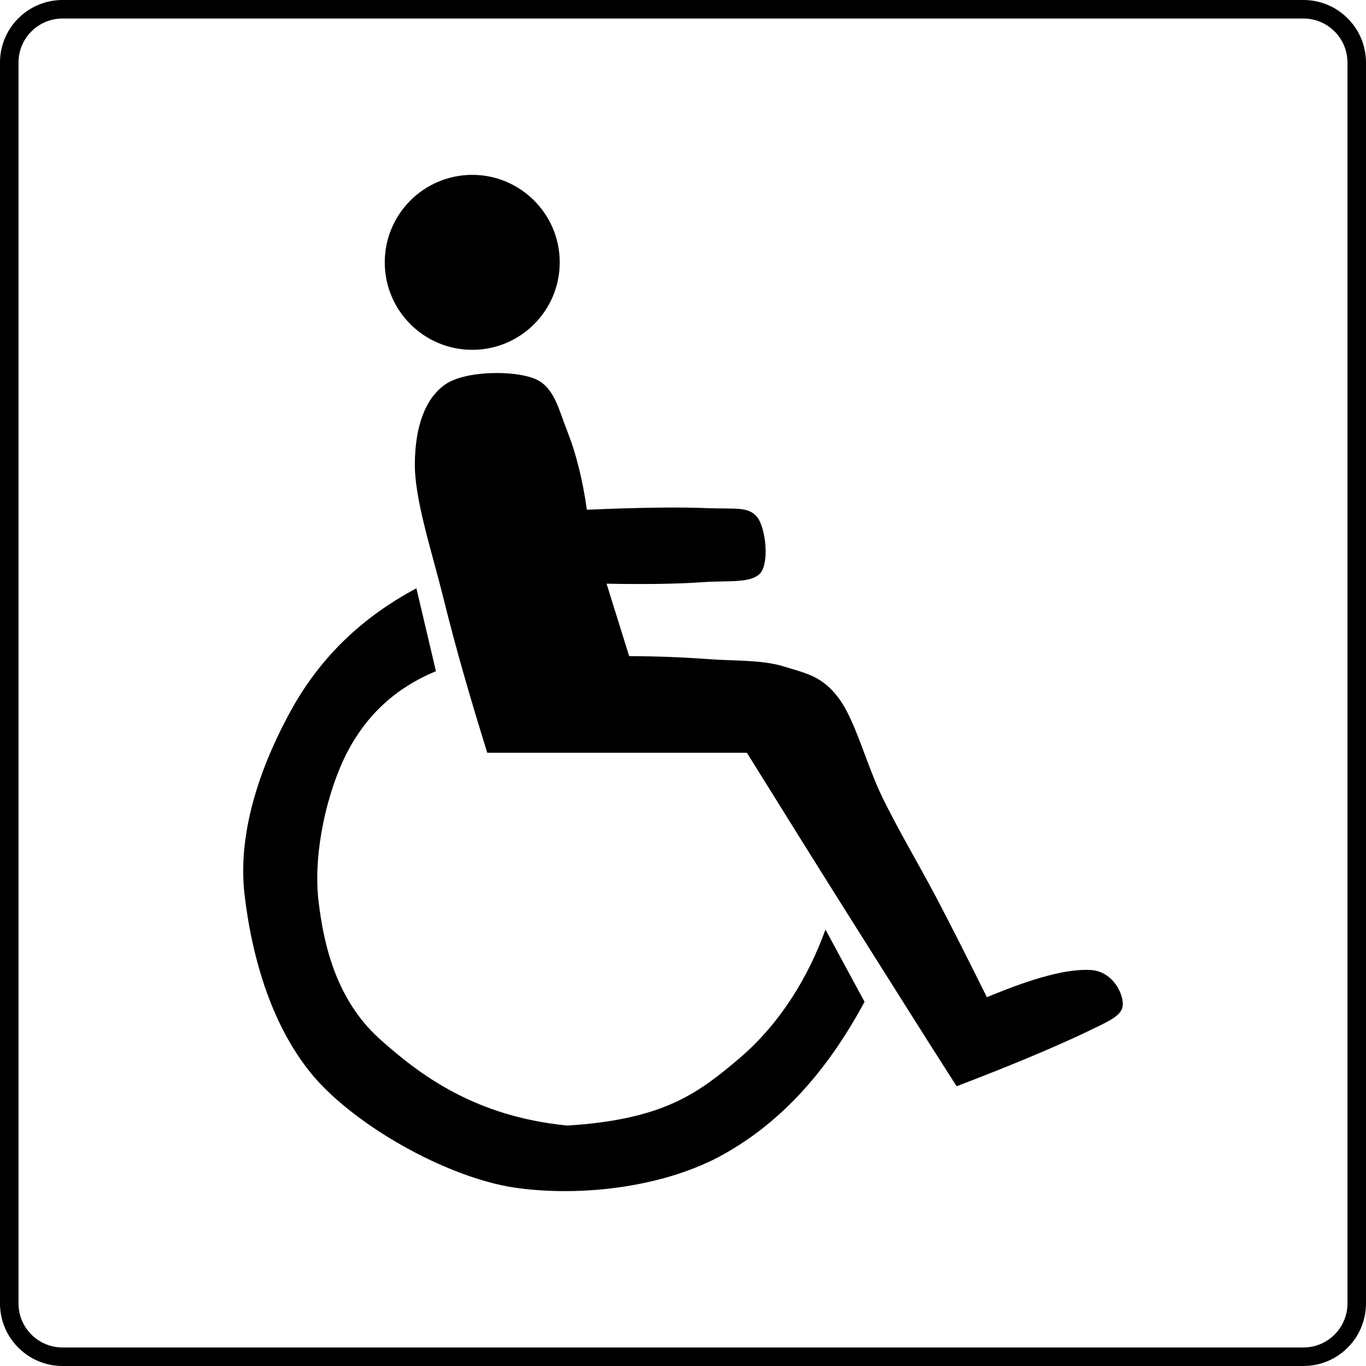 Знак инвалидной коляски. Значок инвалида. Инвалидная коляска знак. Значок инвалид колясочник. Пиктограмма инвалид на коляске.